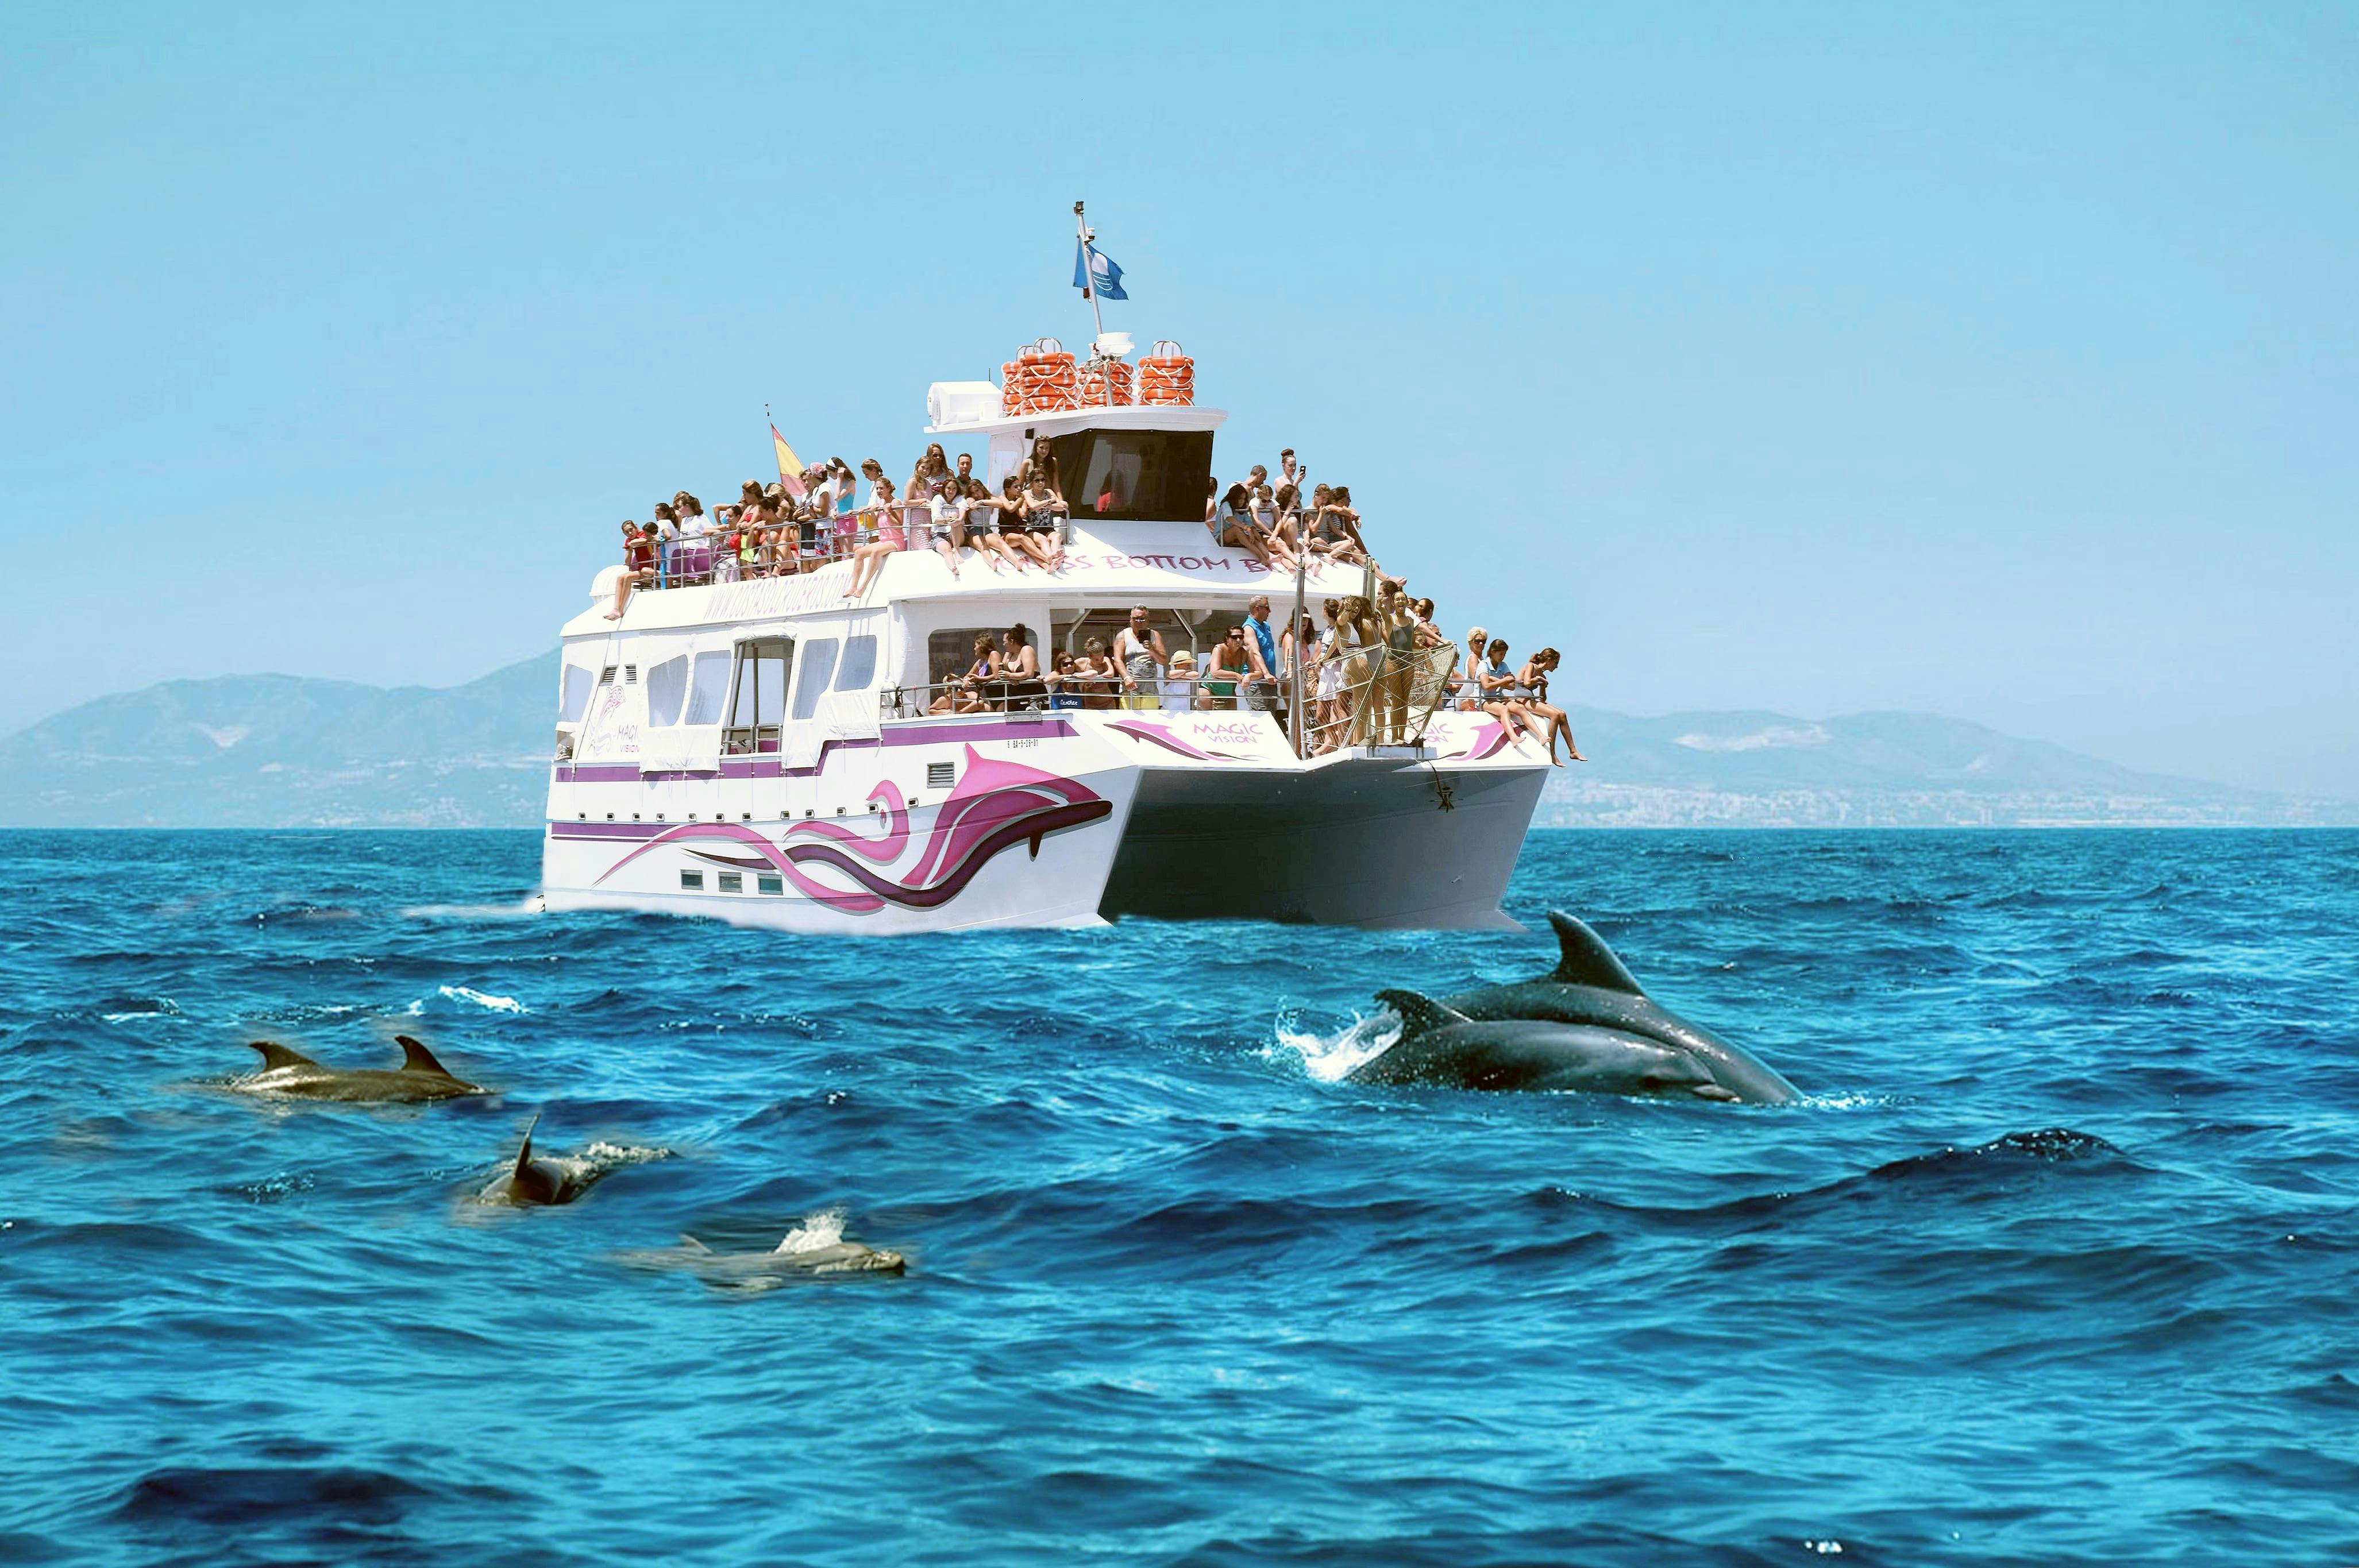 Costasol Cruceros Delphinbeobachtung Bootsfahrt